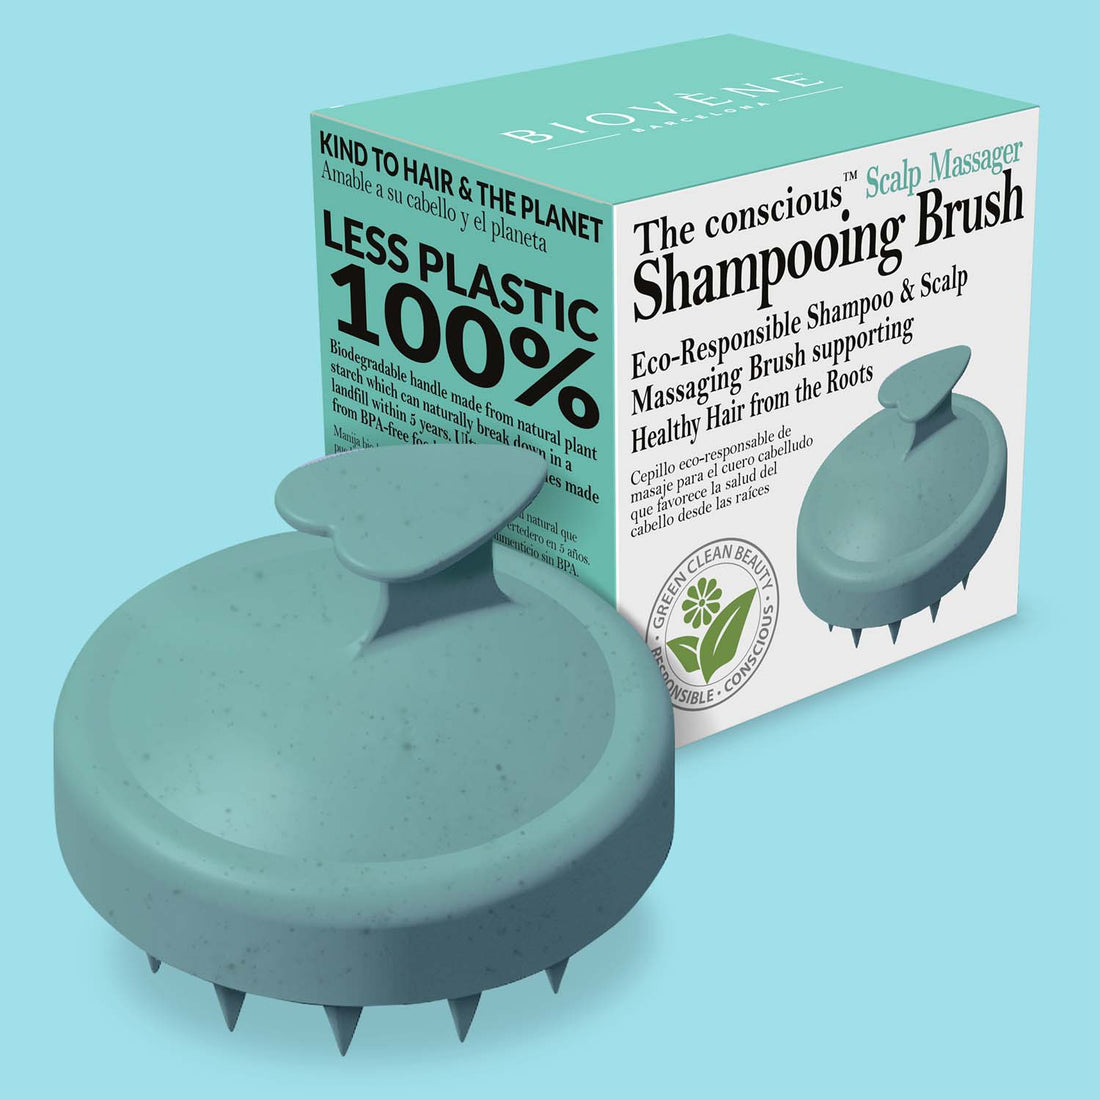 The conscious™ Biodegradable Scalp Massager, Shampooing Brush - MINT GREEN